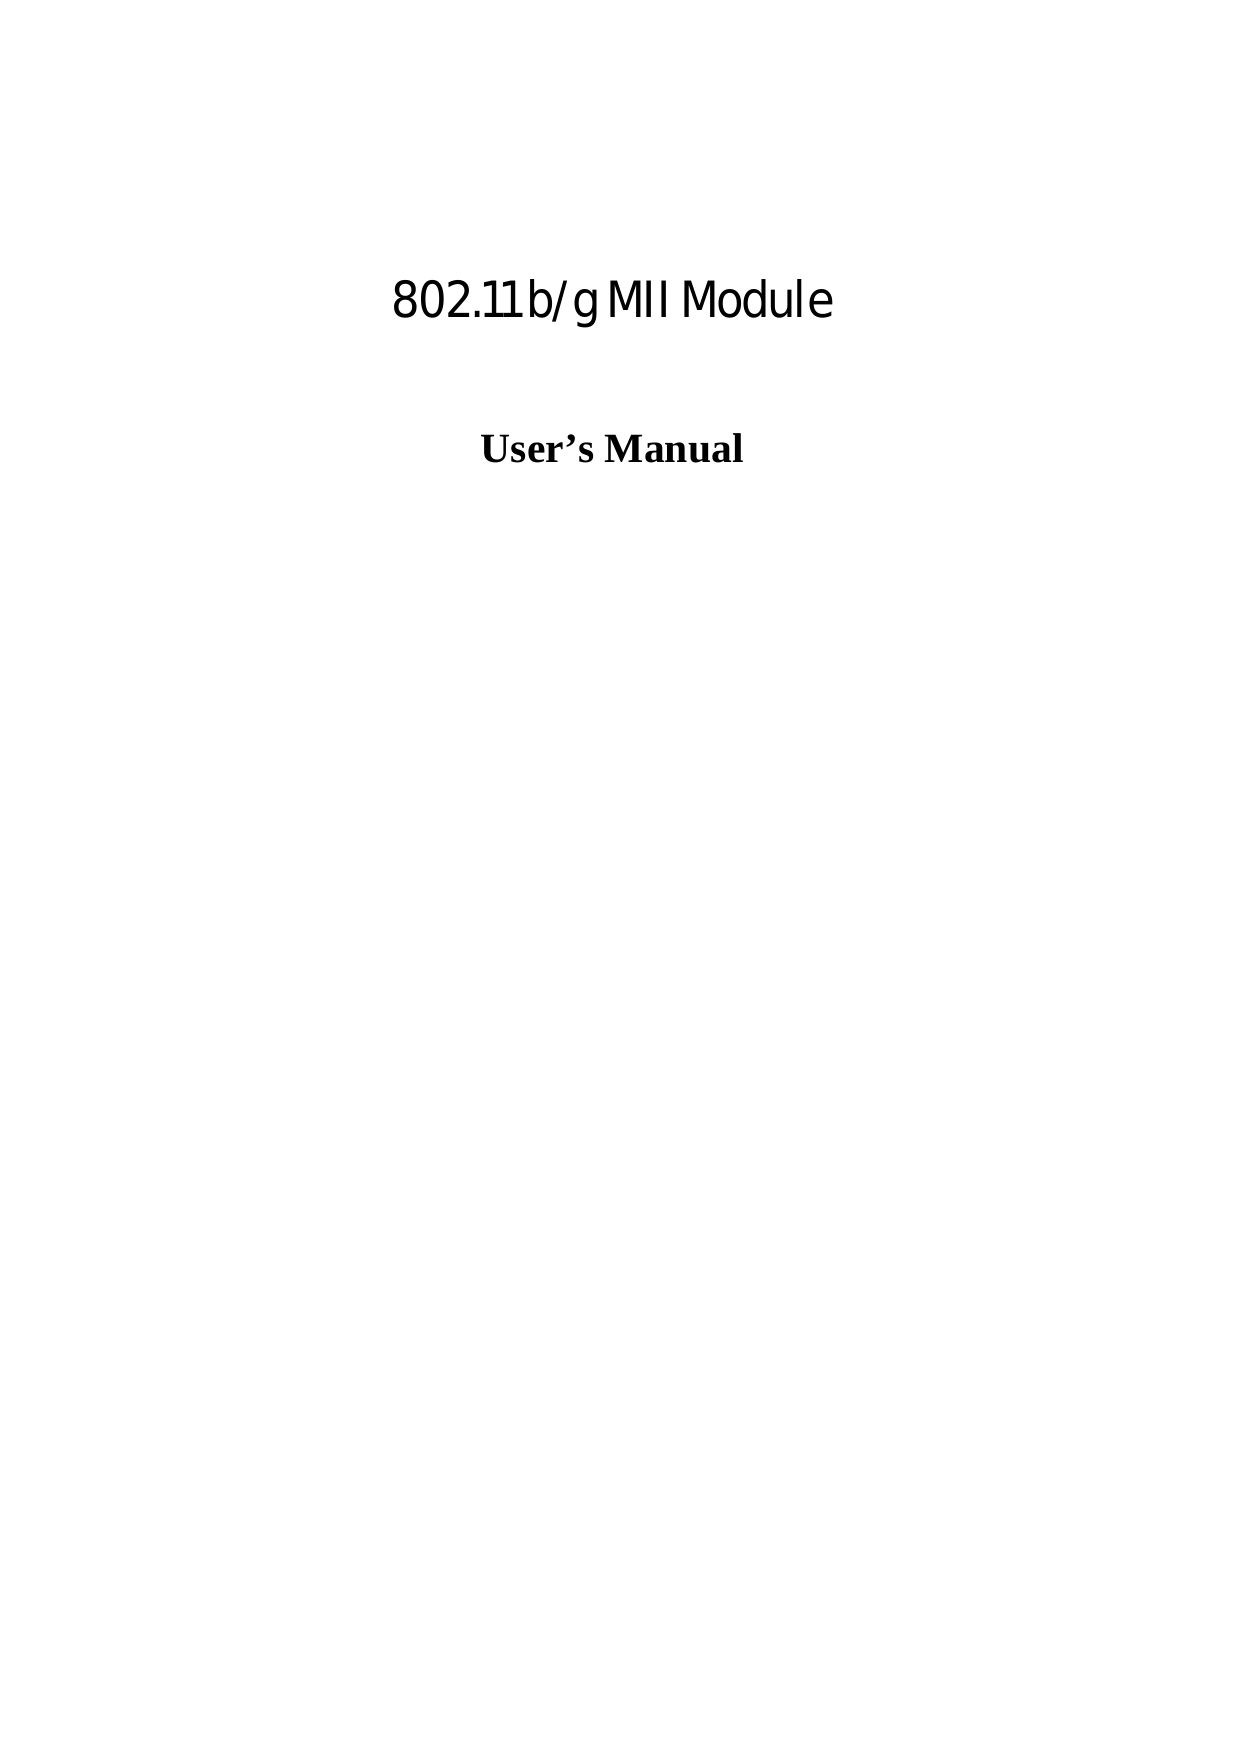     802.11 b/g MII Module  User’s Manual        